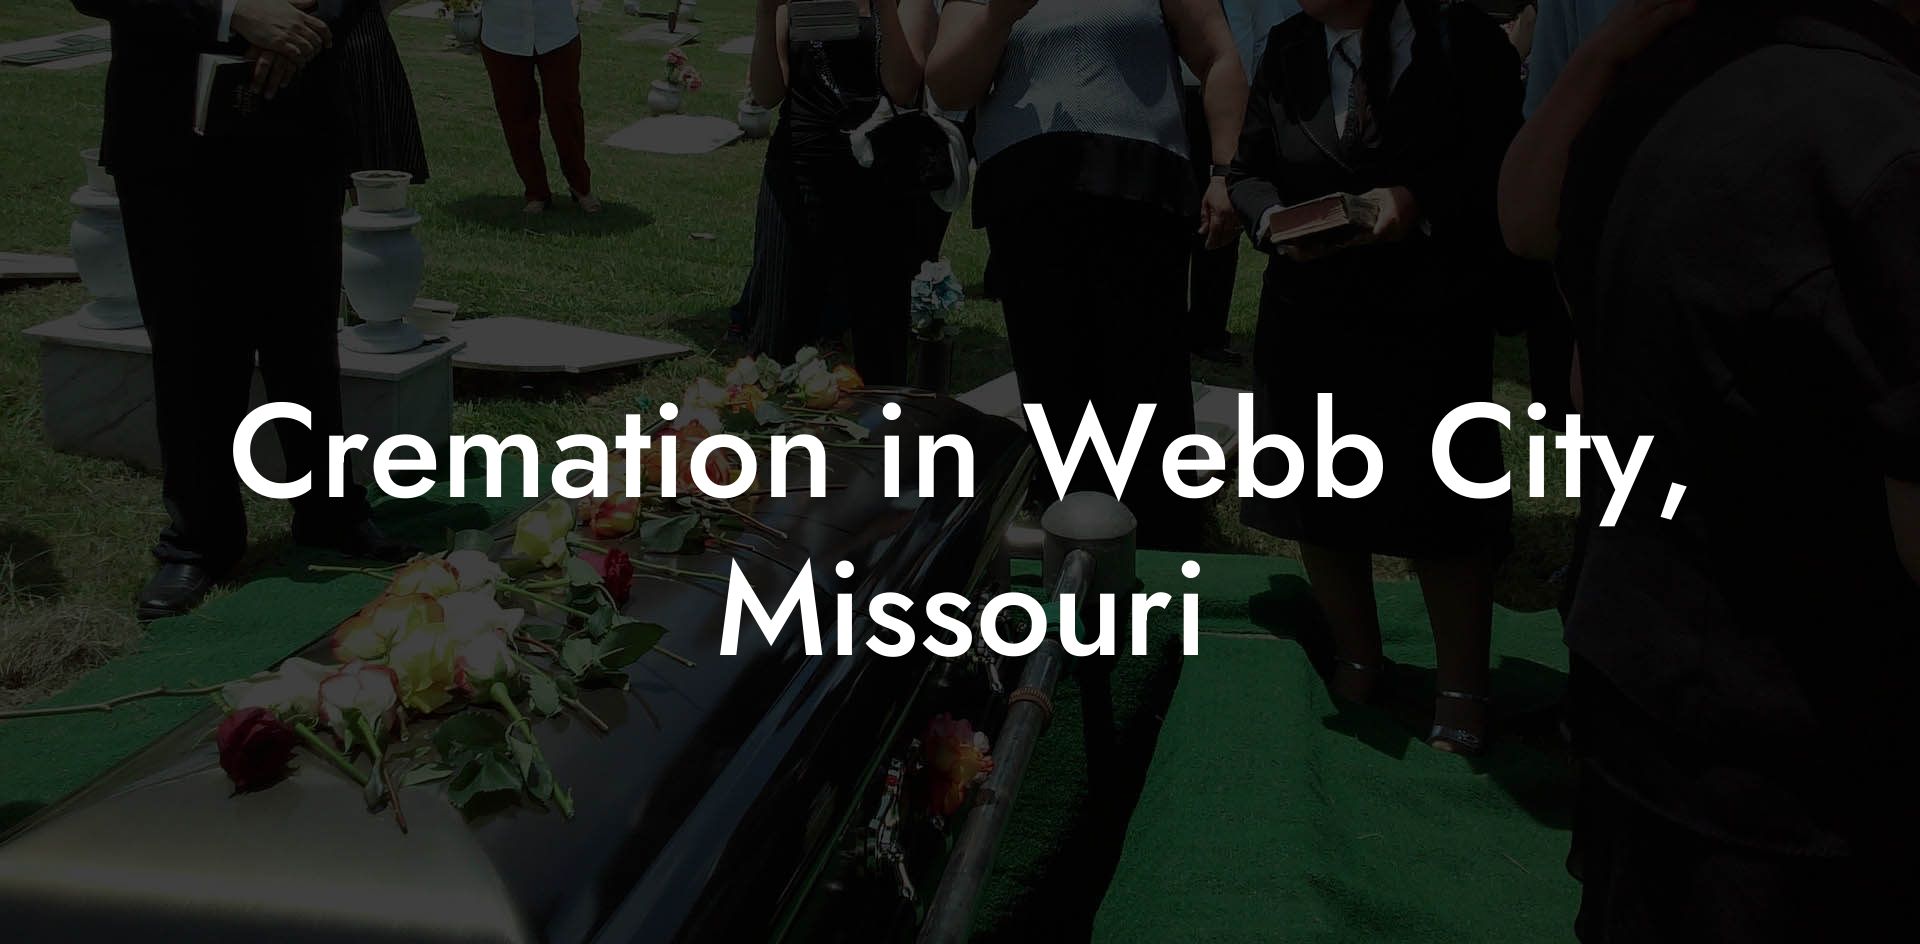 Cremation in Webb City, Missouri